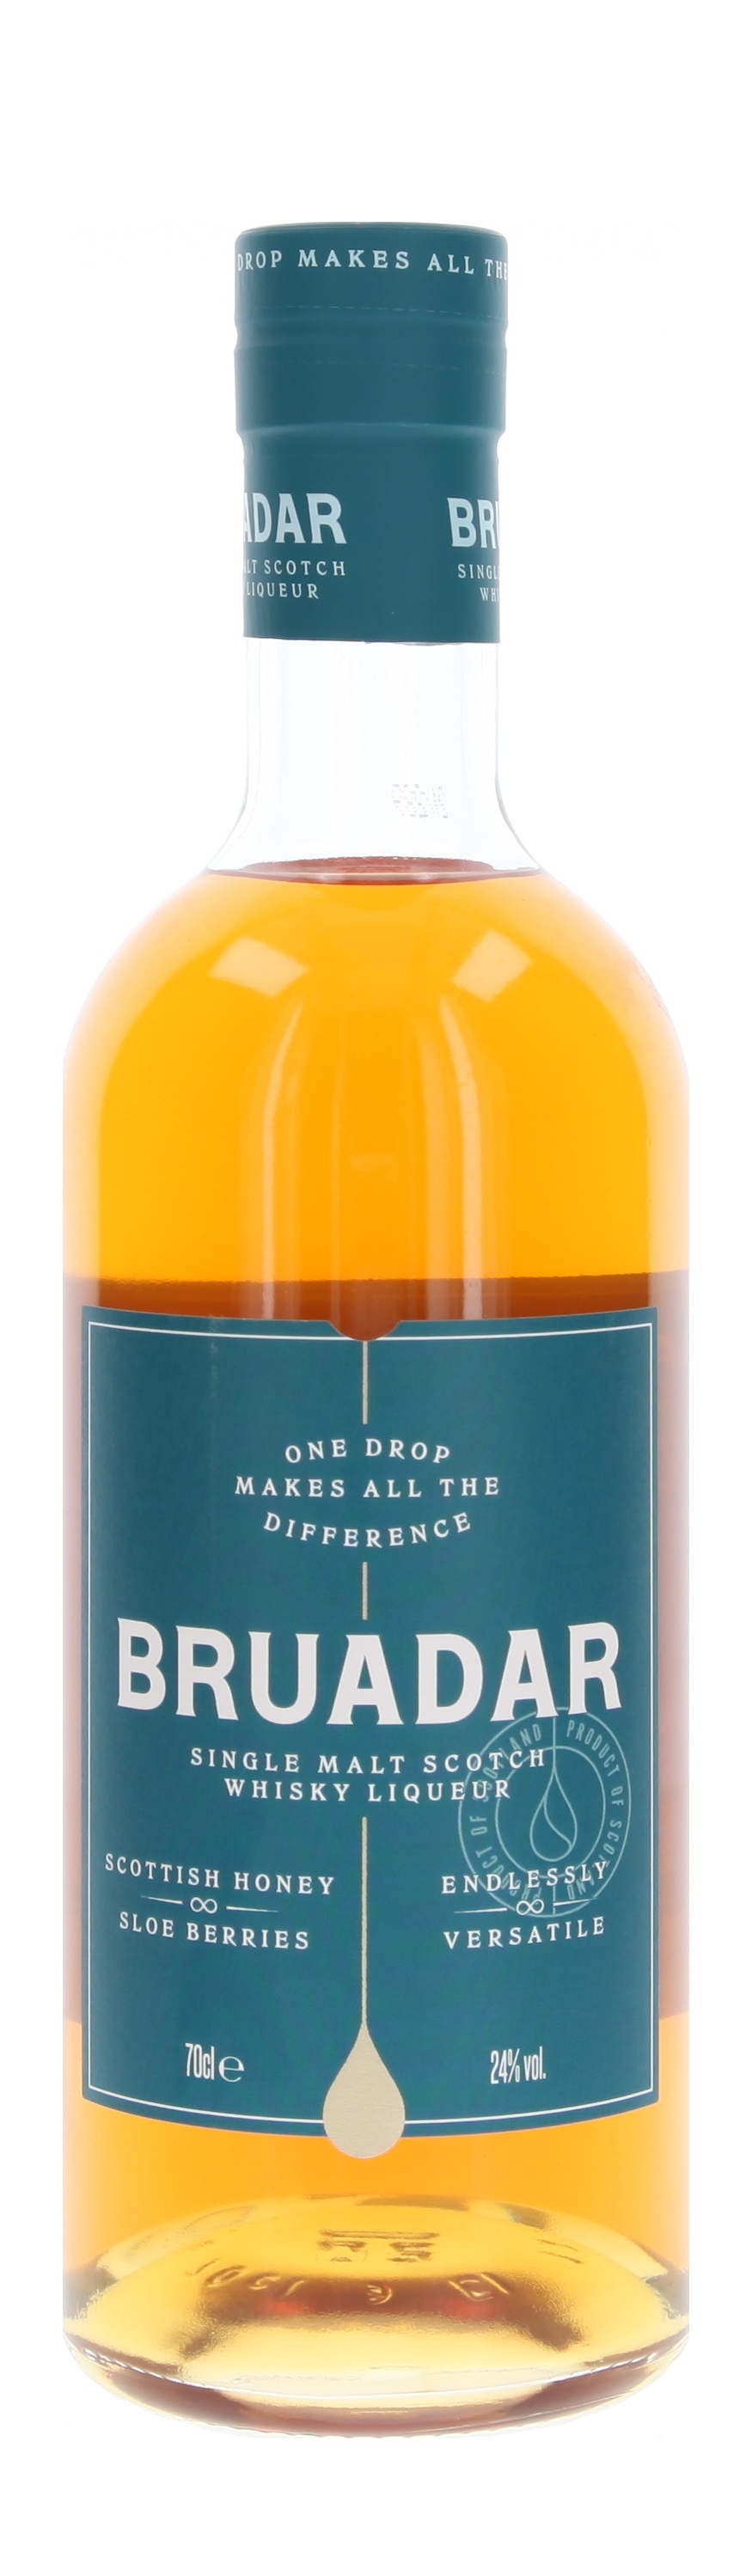 Bruadar | Whisky.de Austria » To the online store